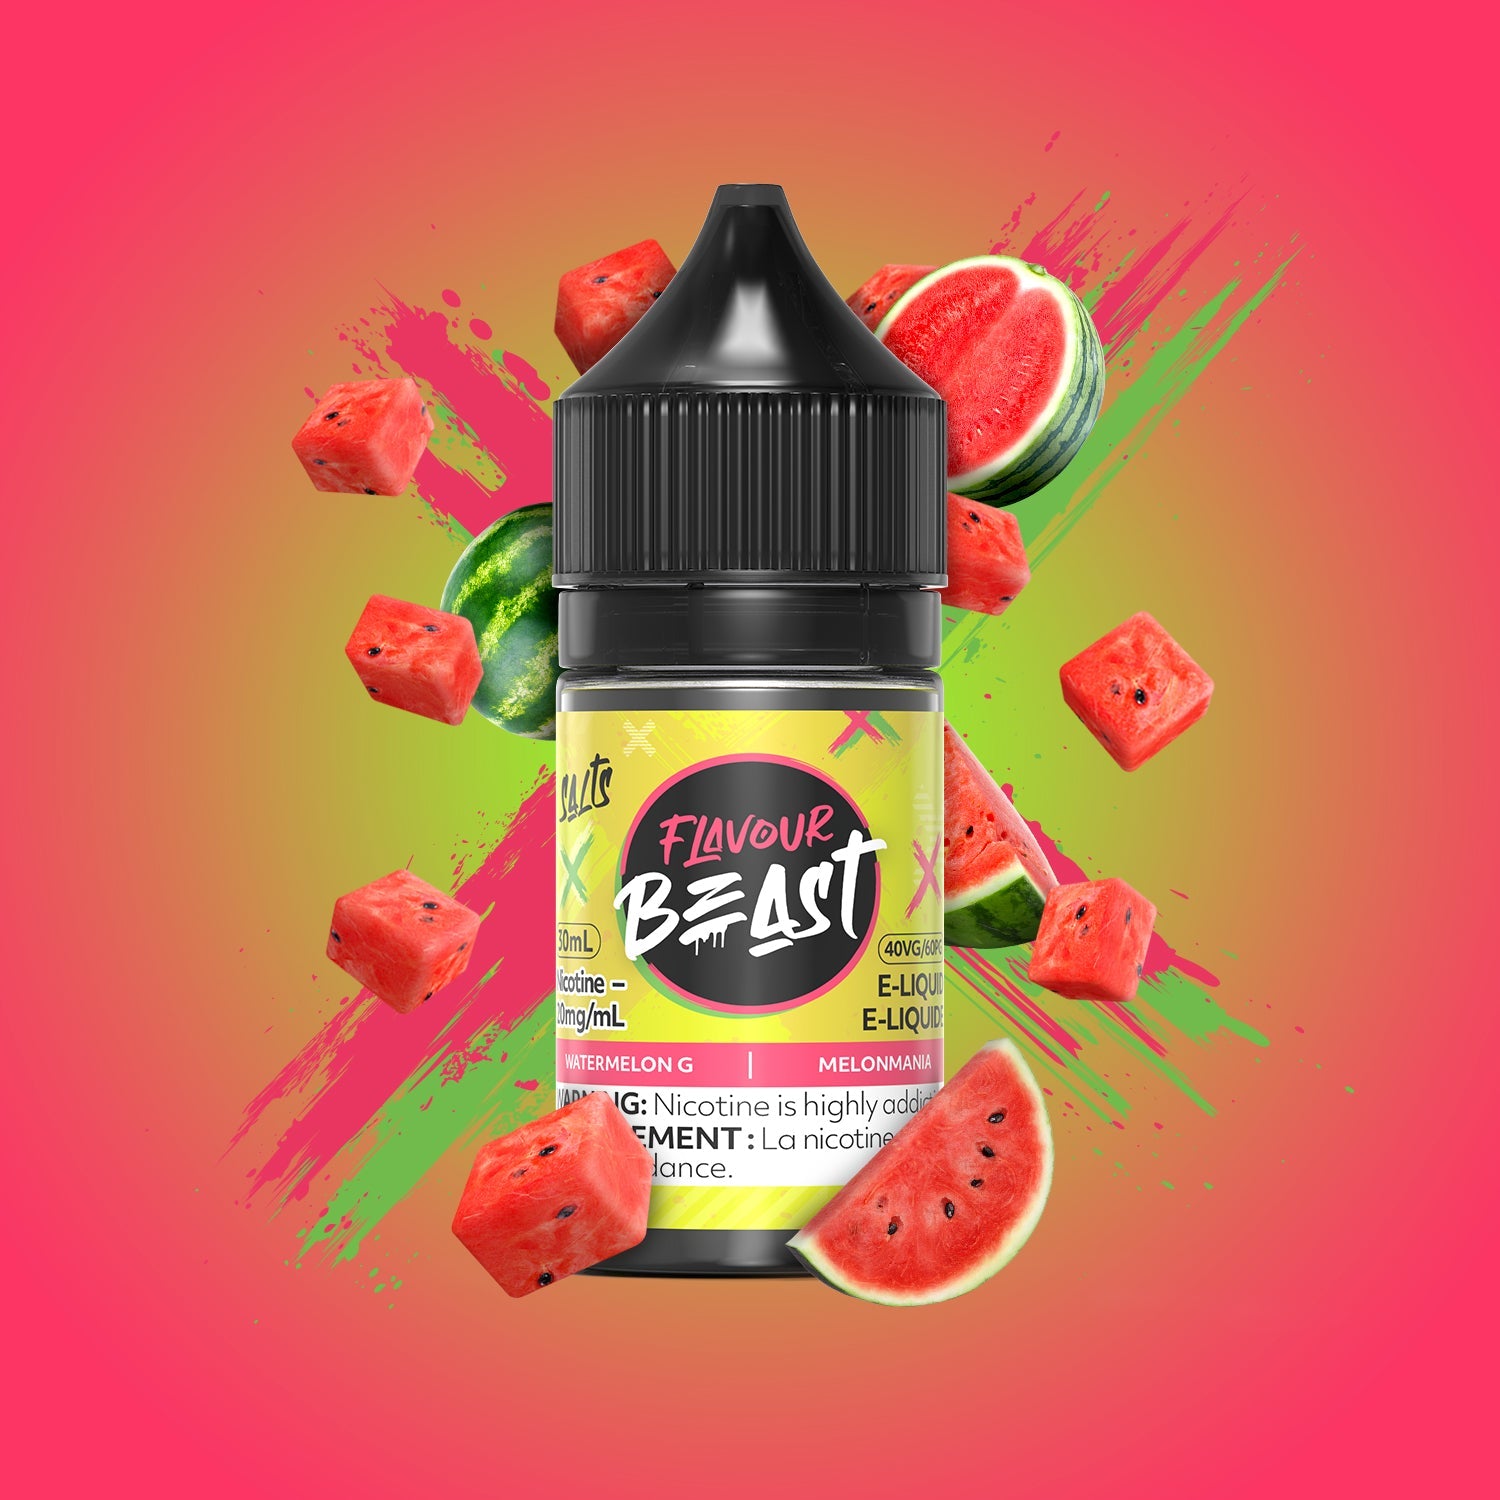 Flavour Beast Salt - Watermelon G (EXCISE TAXED)